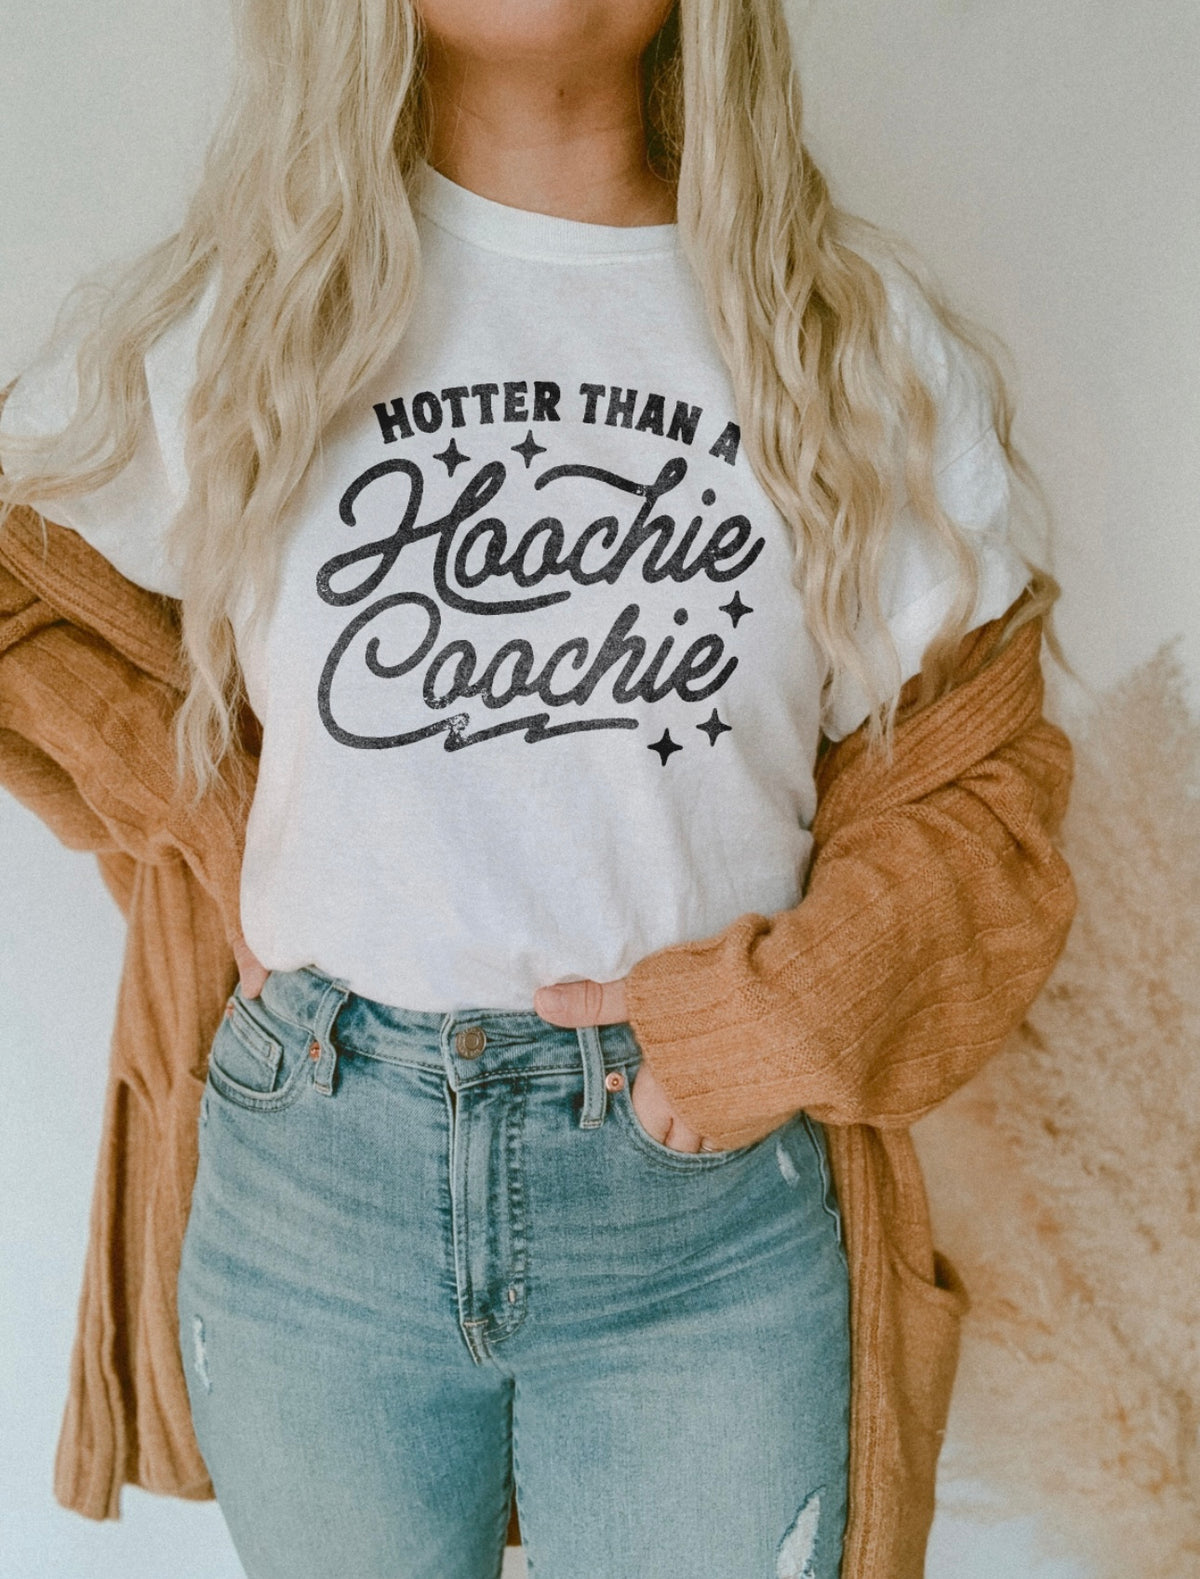 Hotter Than A Hoochie Coochie Comfort Colors Unisex Garment-Dyed T-shirt